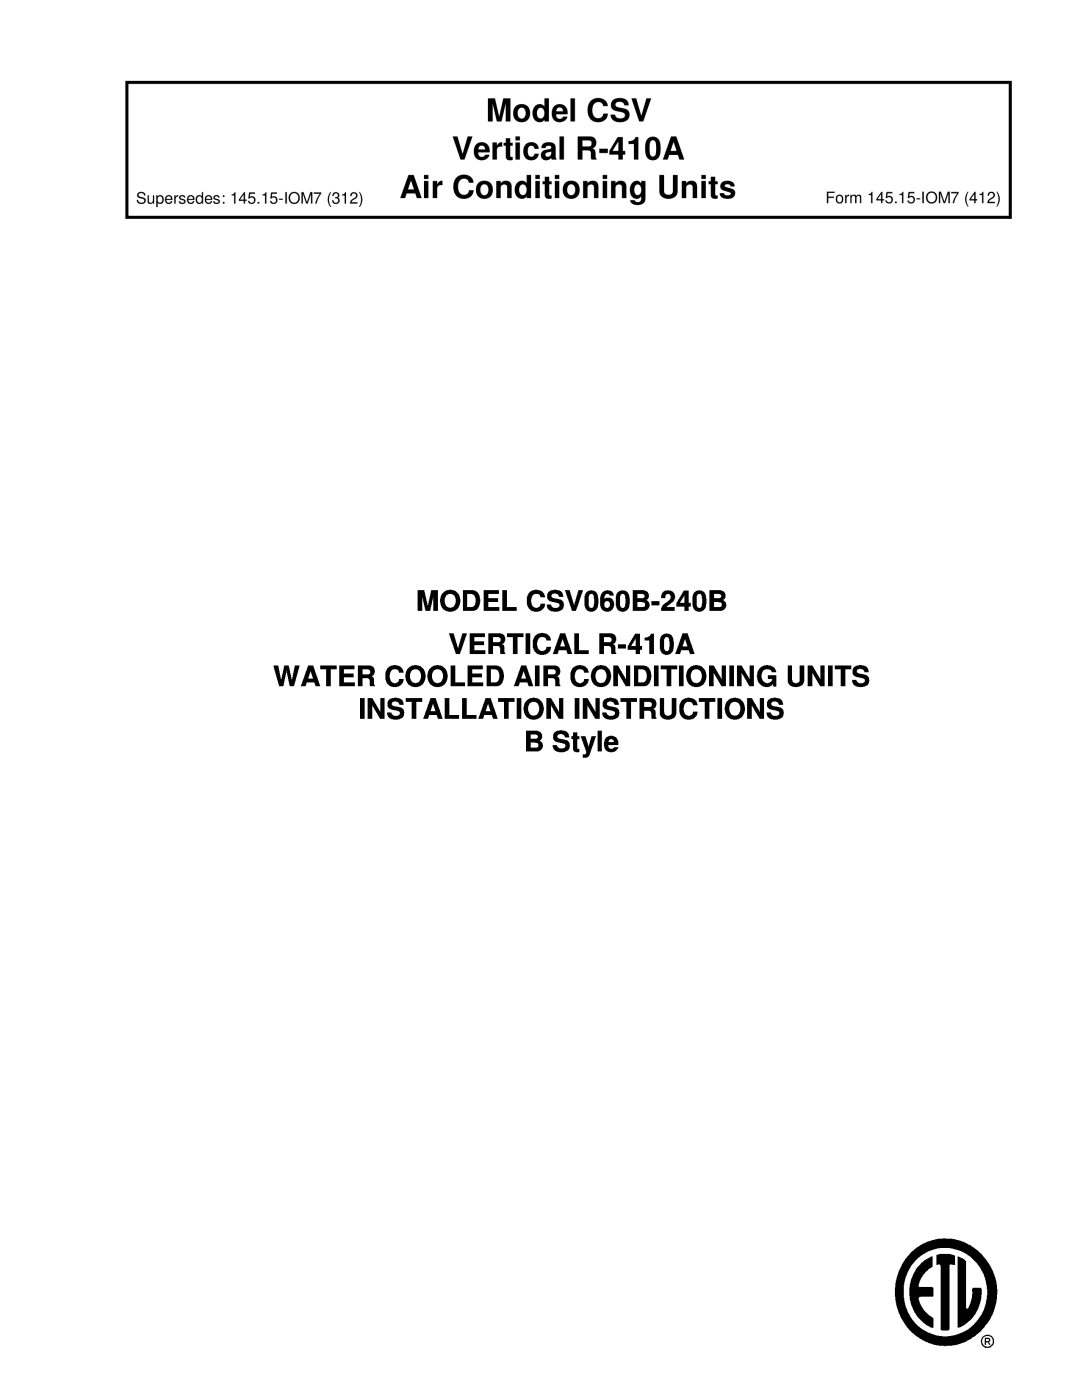 Johnson Controls installation instructions Model CSV Vertical R-410A, MODEL CSV060B-240B VERTICAL R-410A 